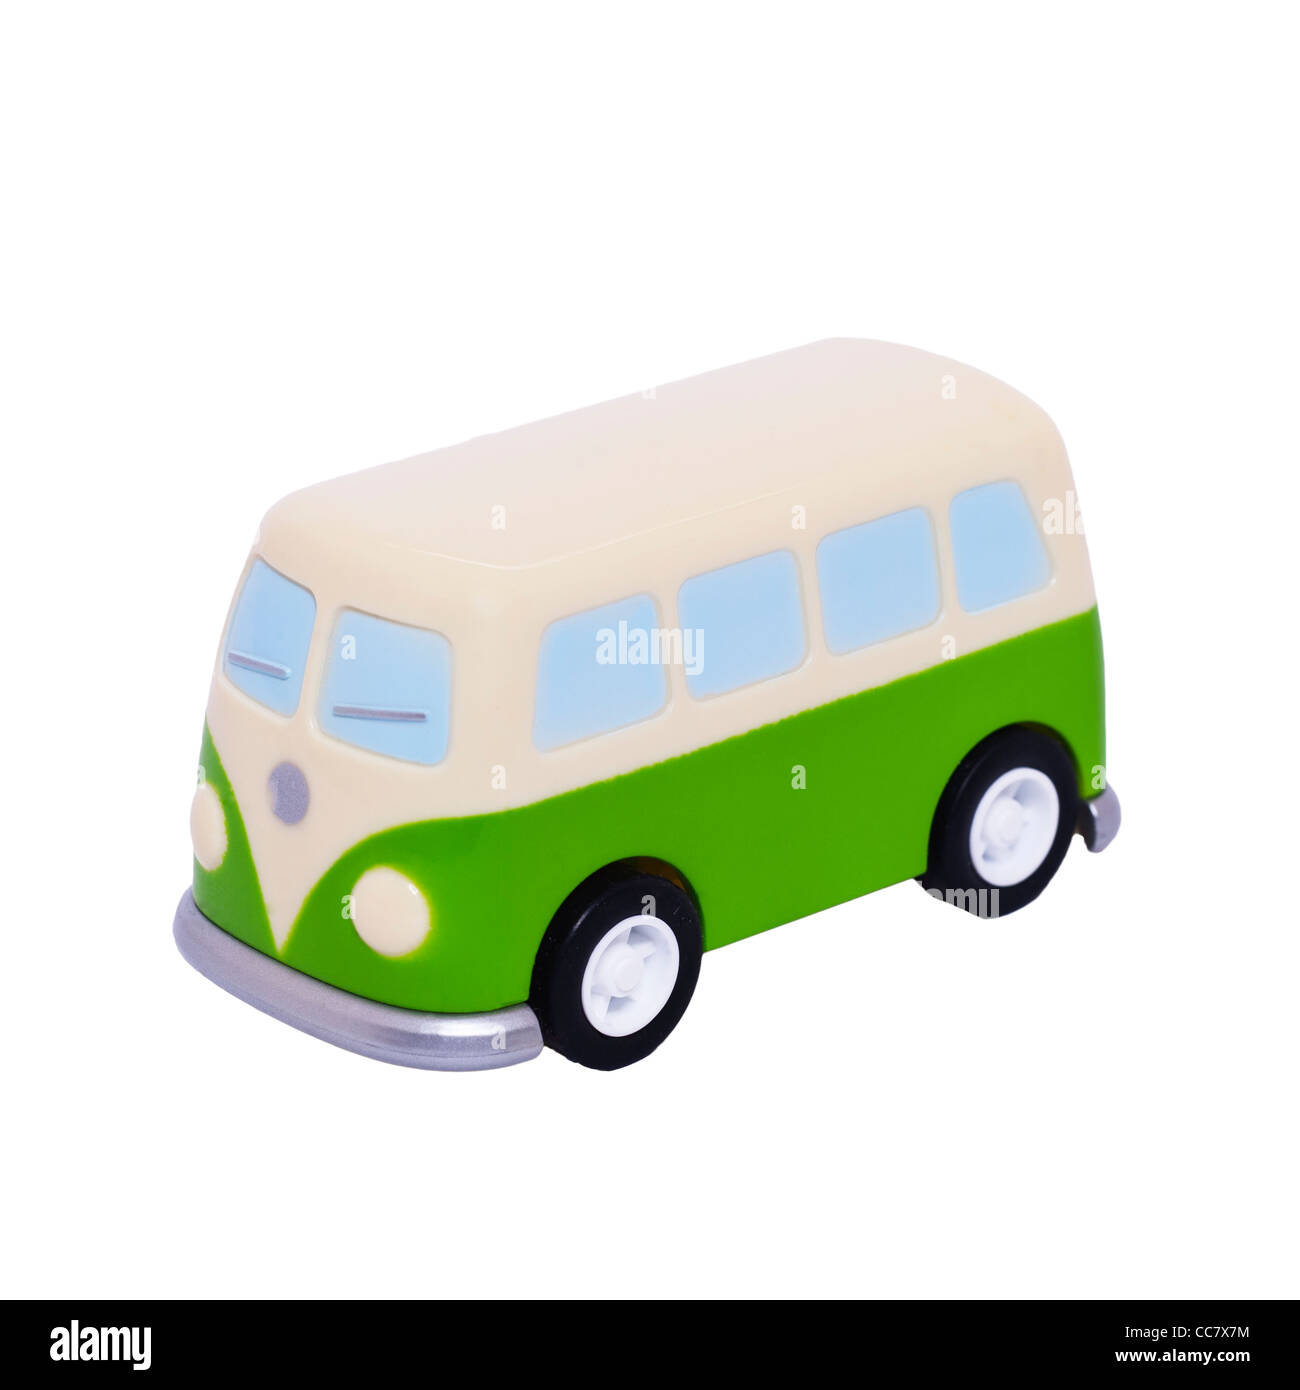 Un juguete modelo VW camper van sobre un fondo blanco. Foto de stock